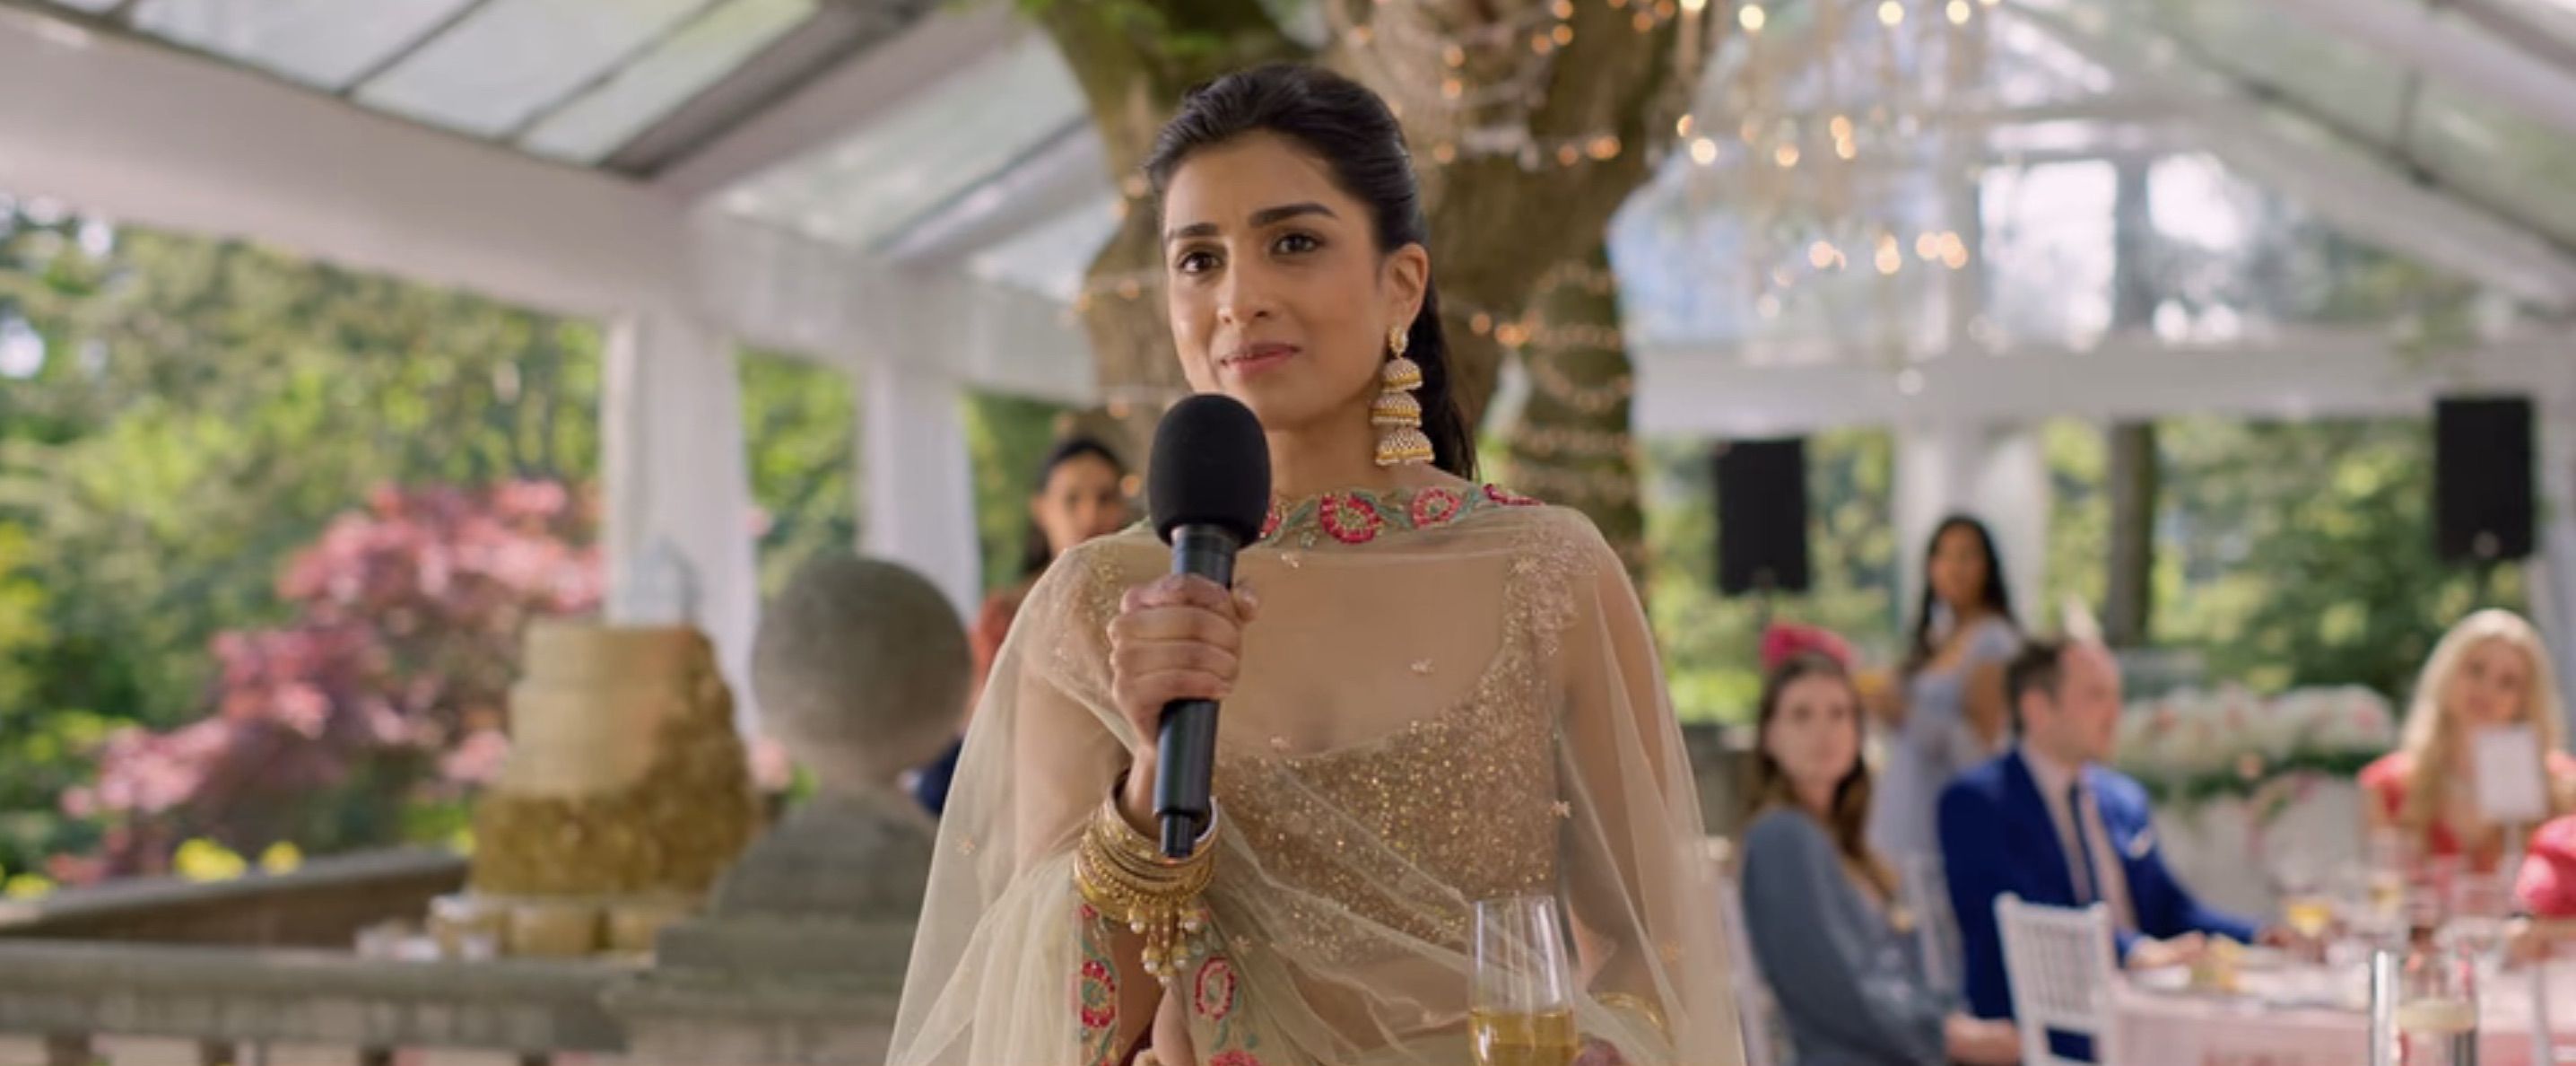 Wedding Season Cast on Netflix - Pallavi Sharda as Asha